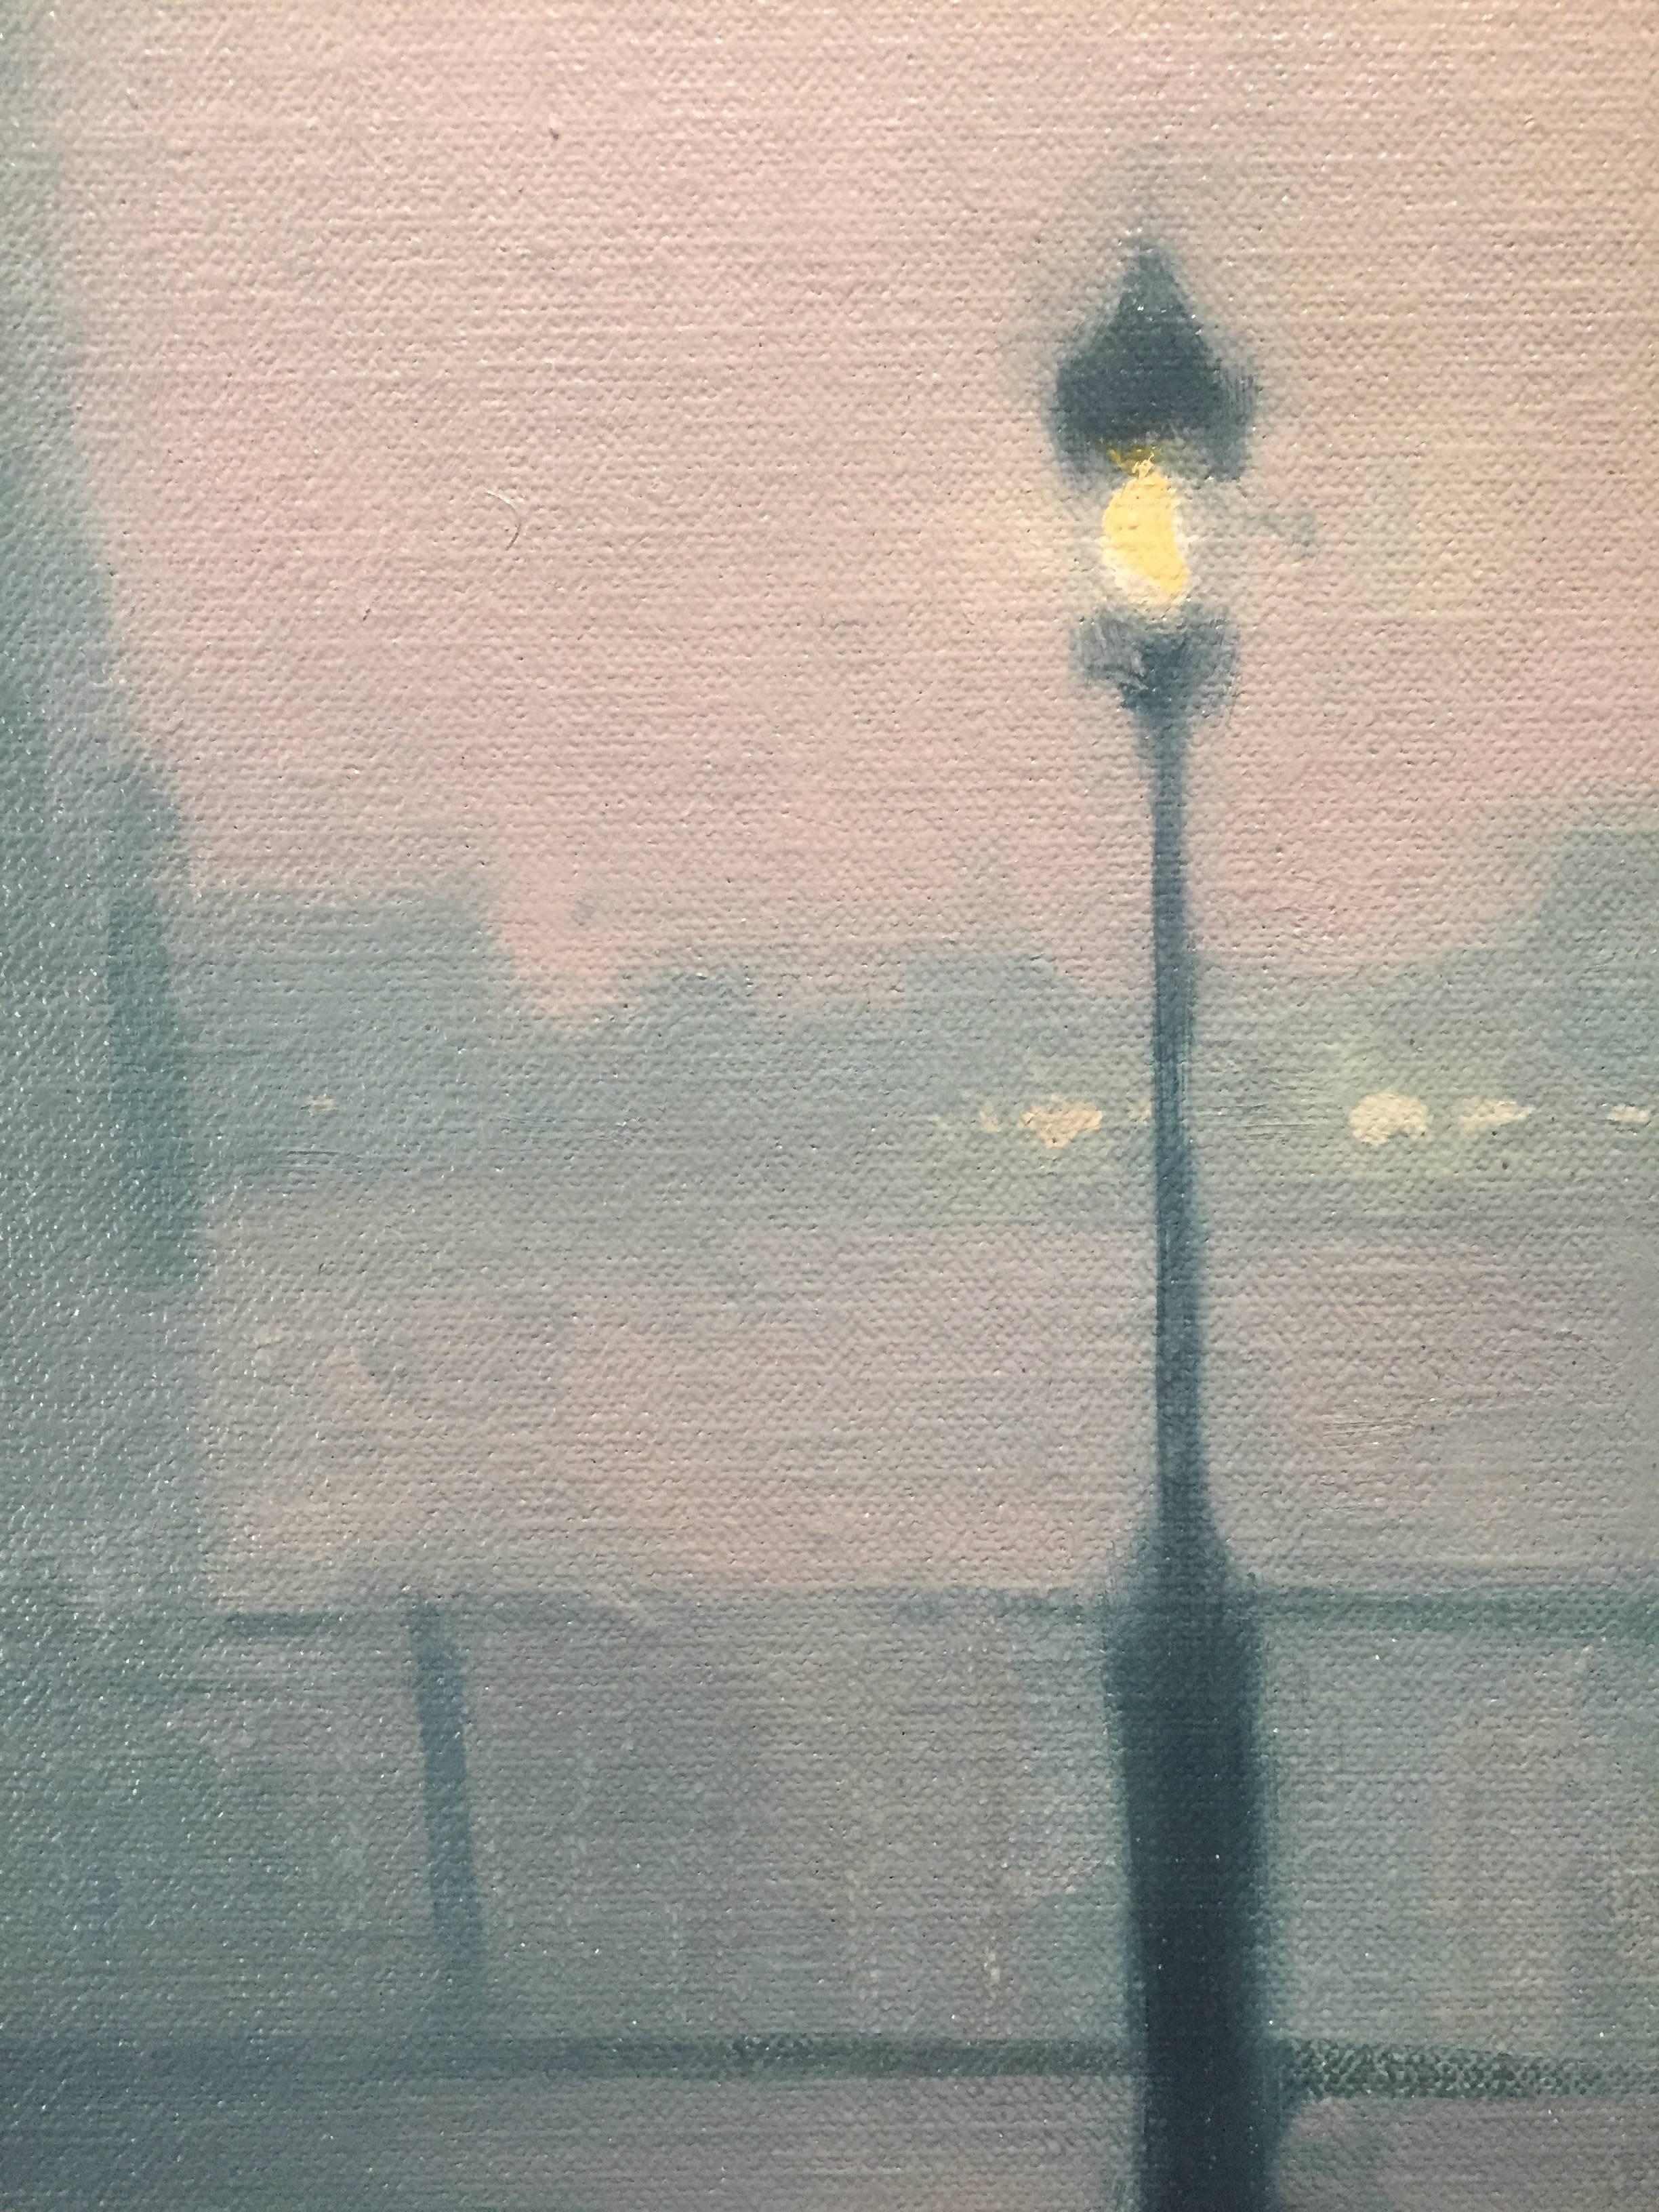 Rainy Day, Williamsburg Bridge - Tonalist Painting by Stephen Bauman